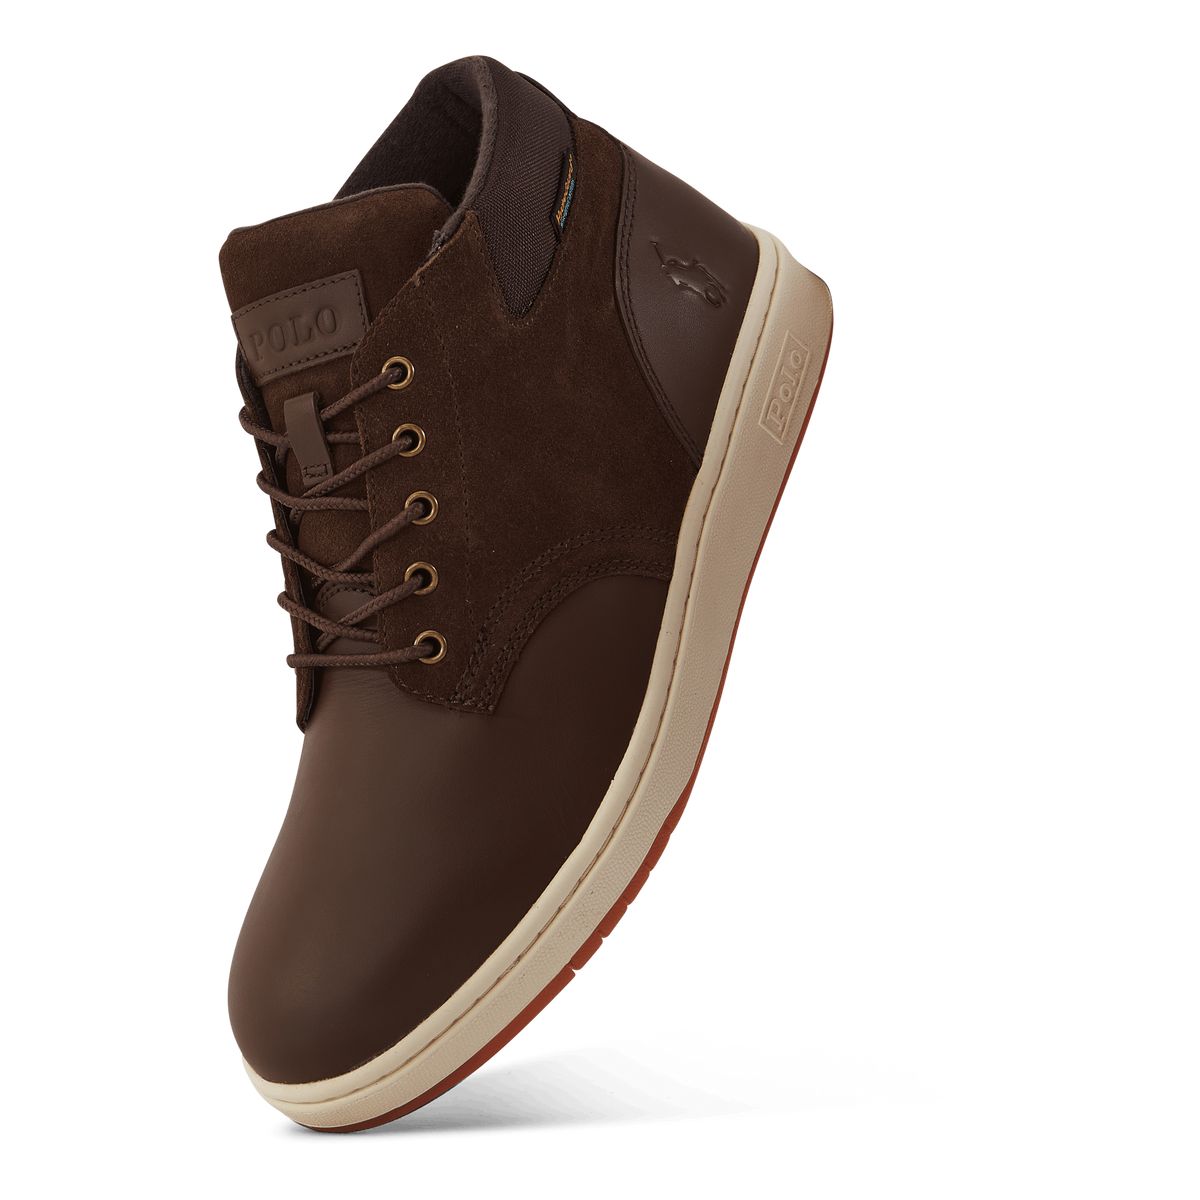 Polo Ralph Lauren Waterproof Leather- Sneaker Boot